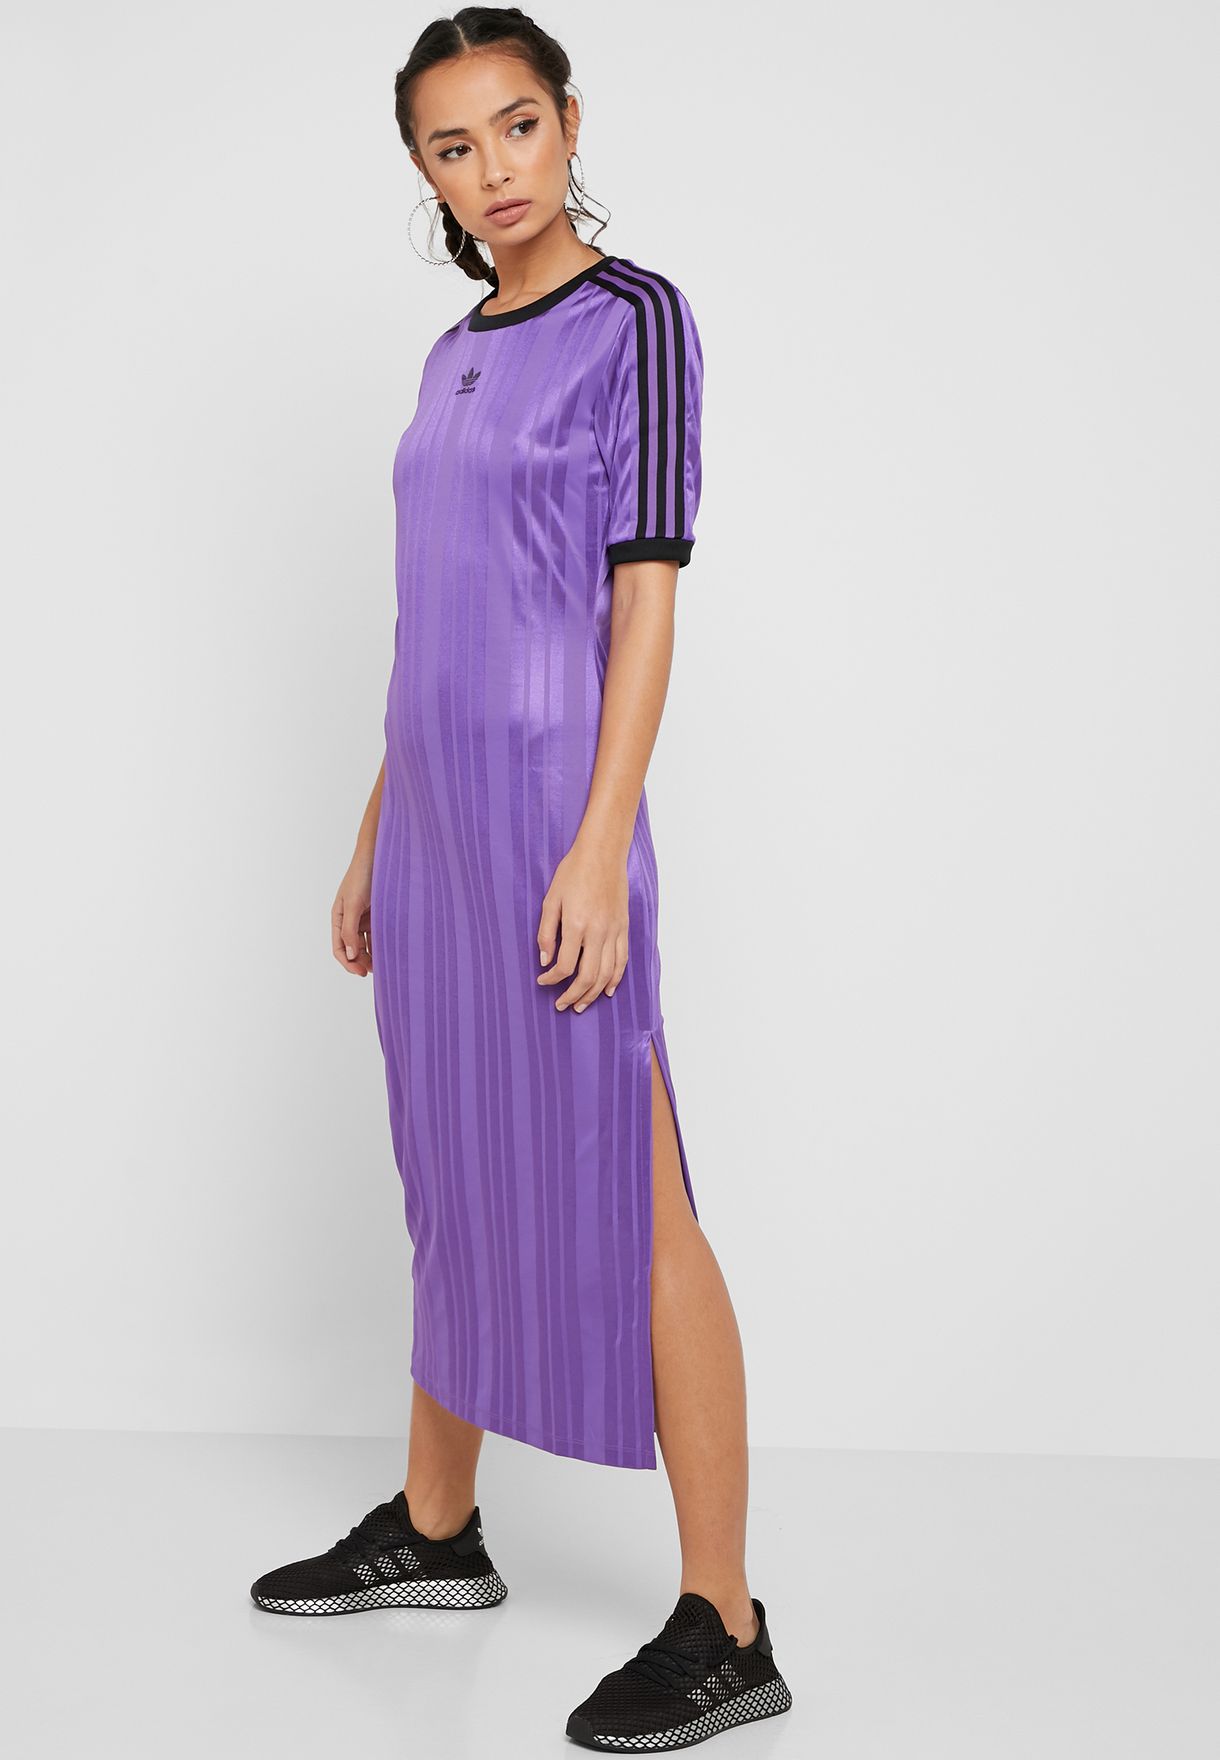 purple adidas dress